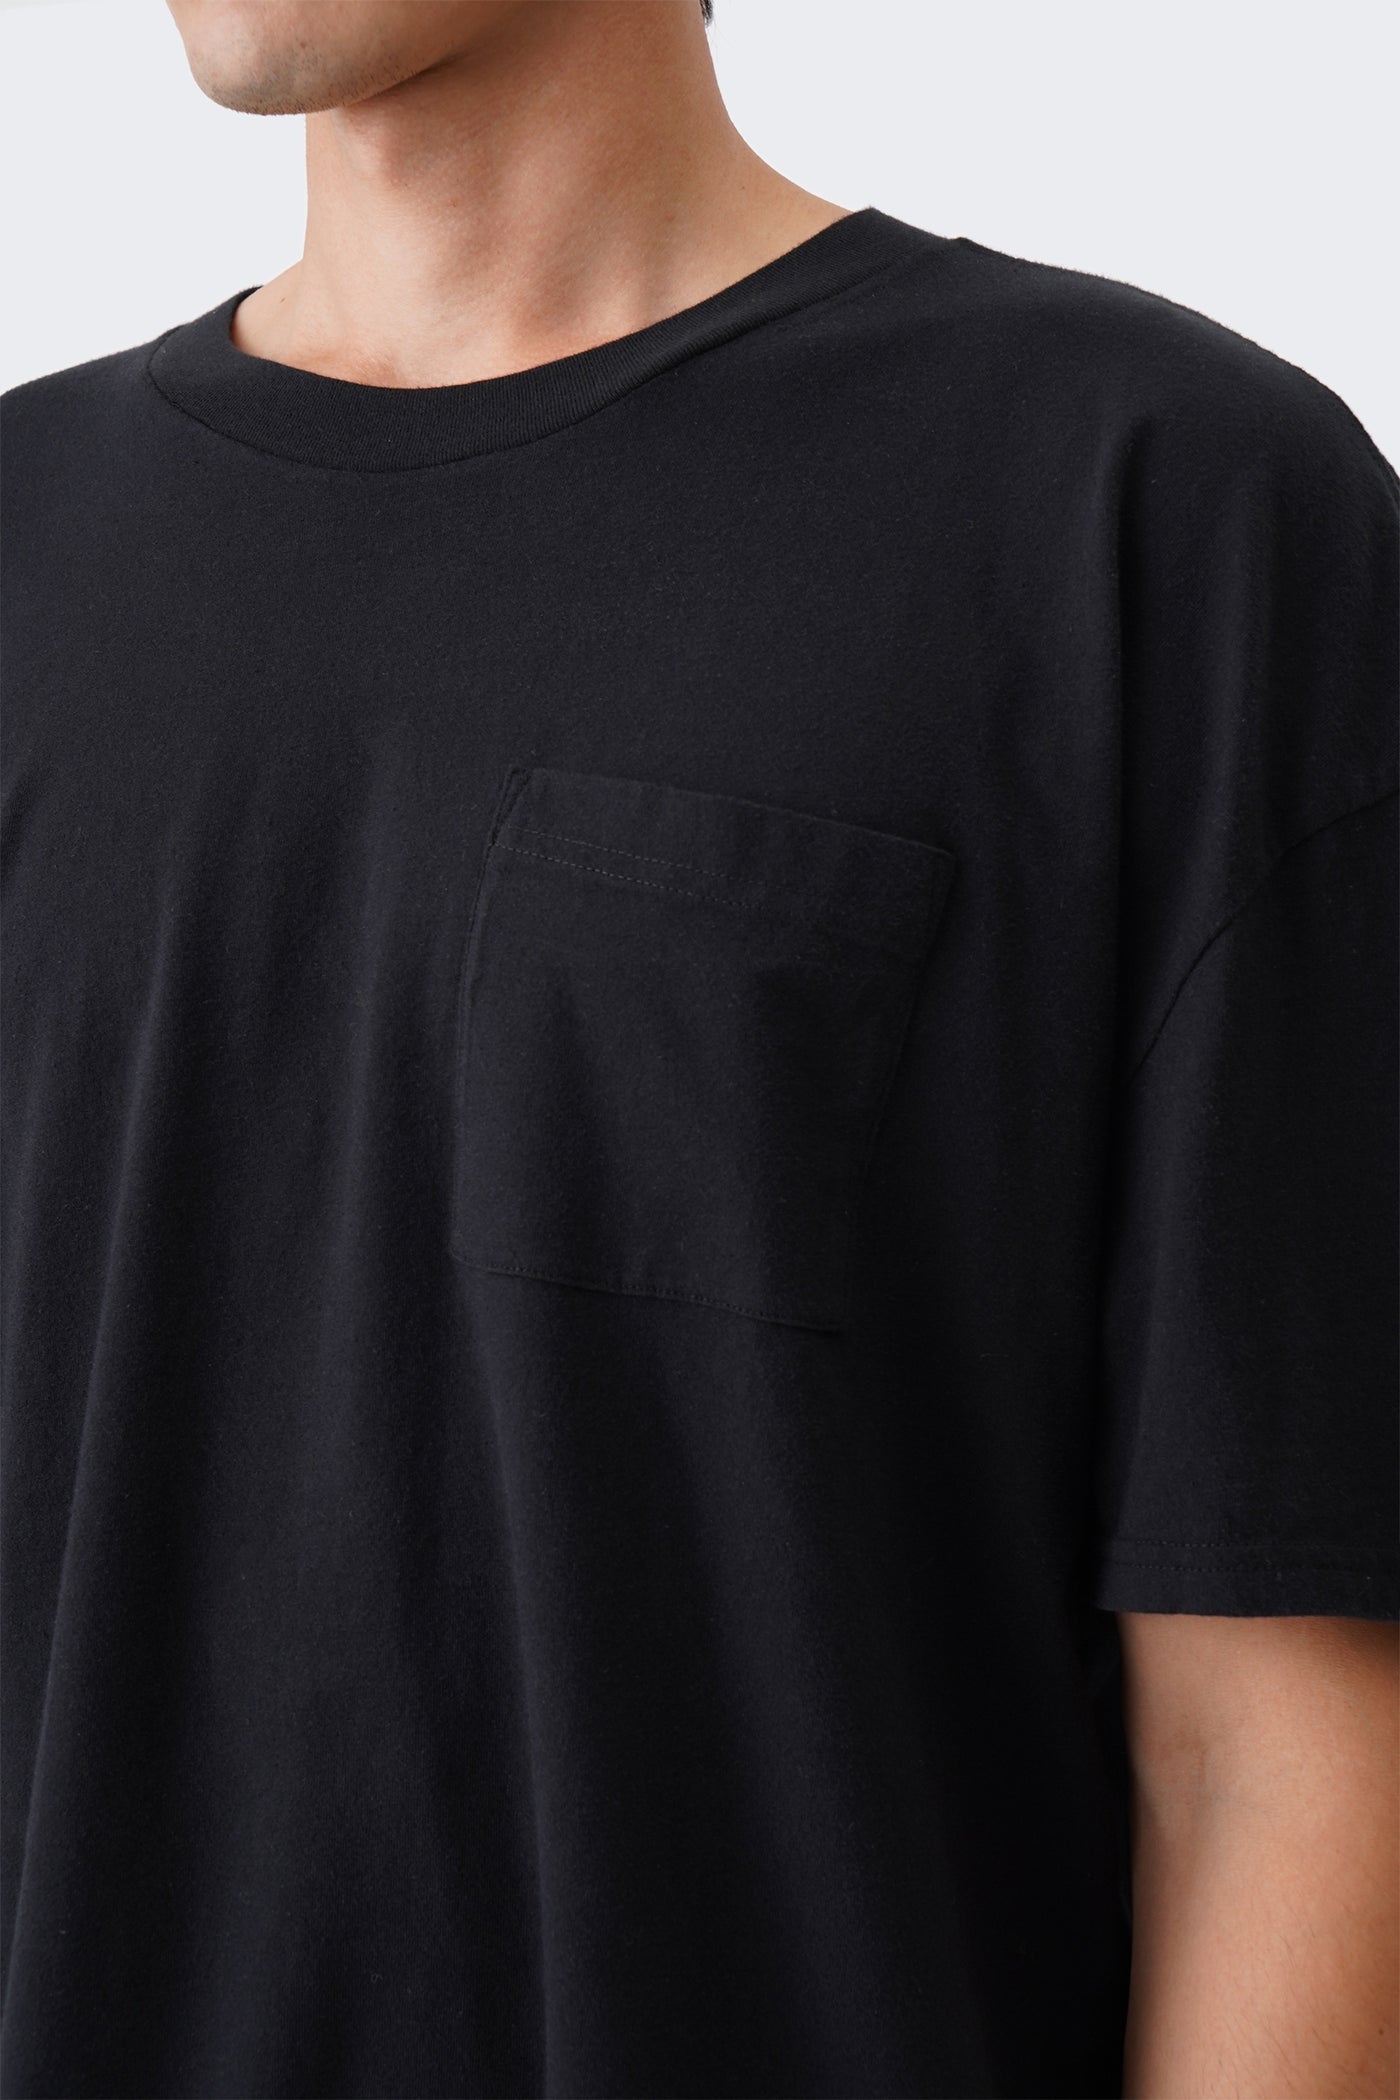 Oversized Round Neck T-Shirt with Pocket